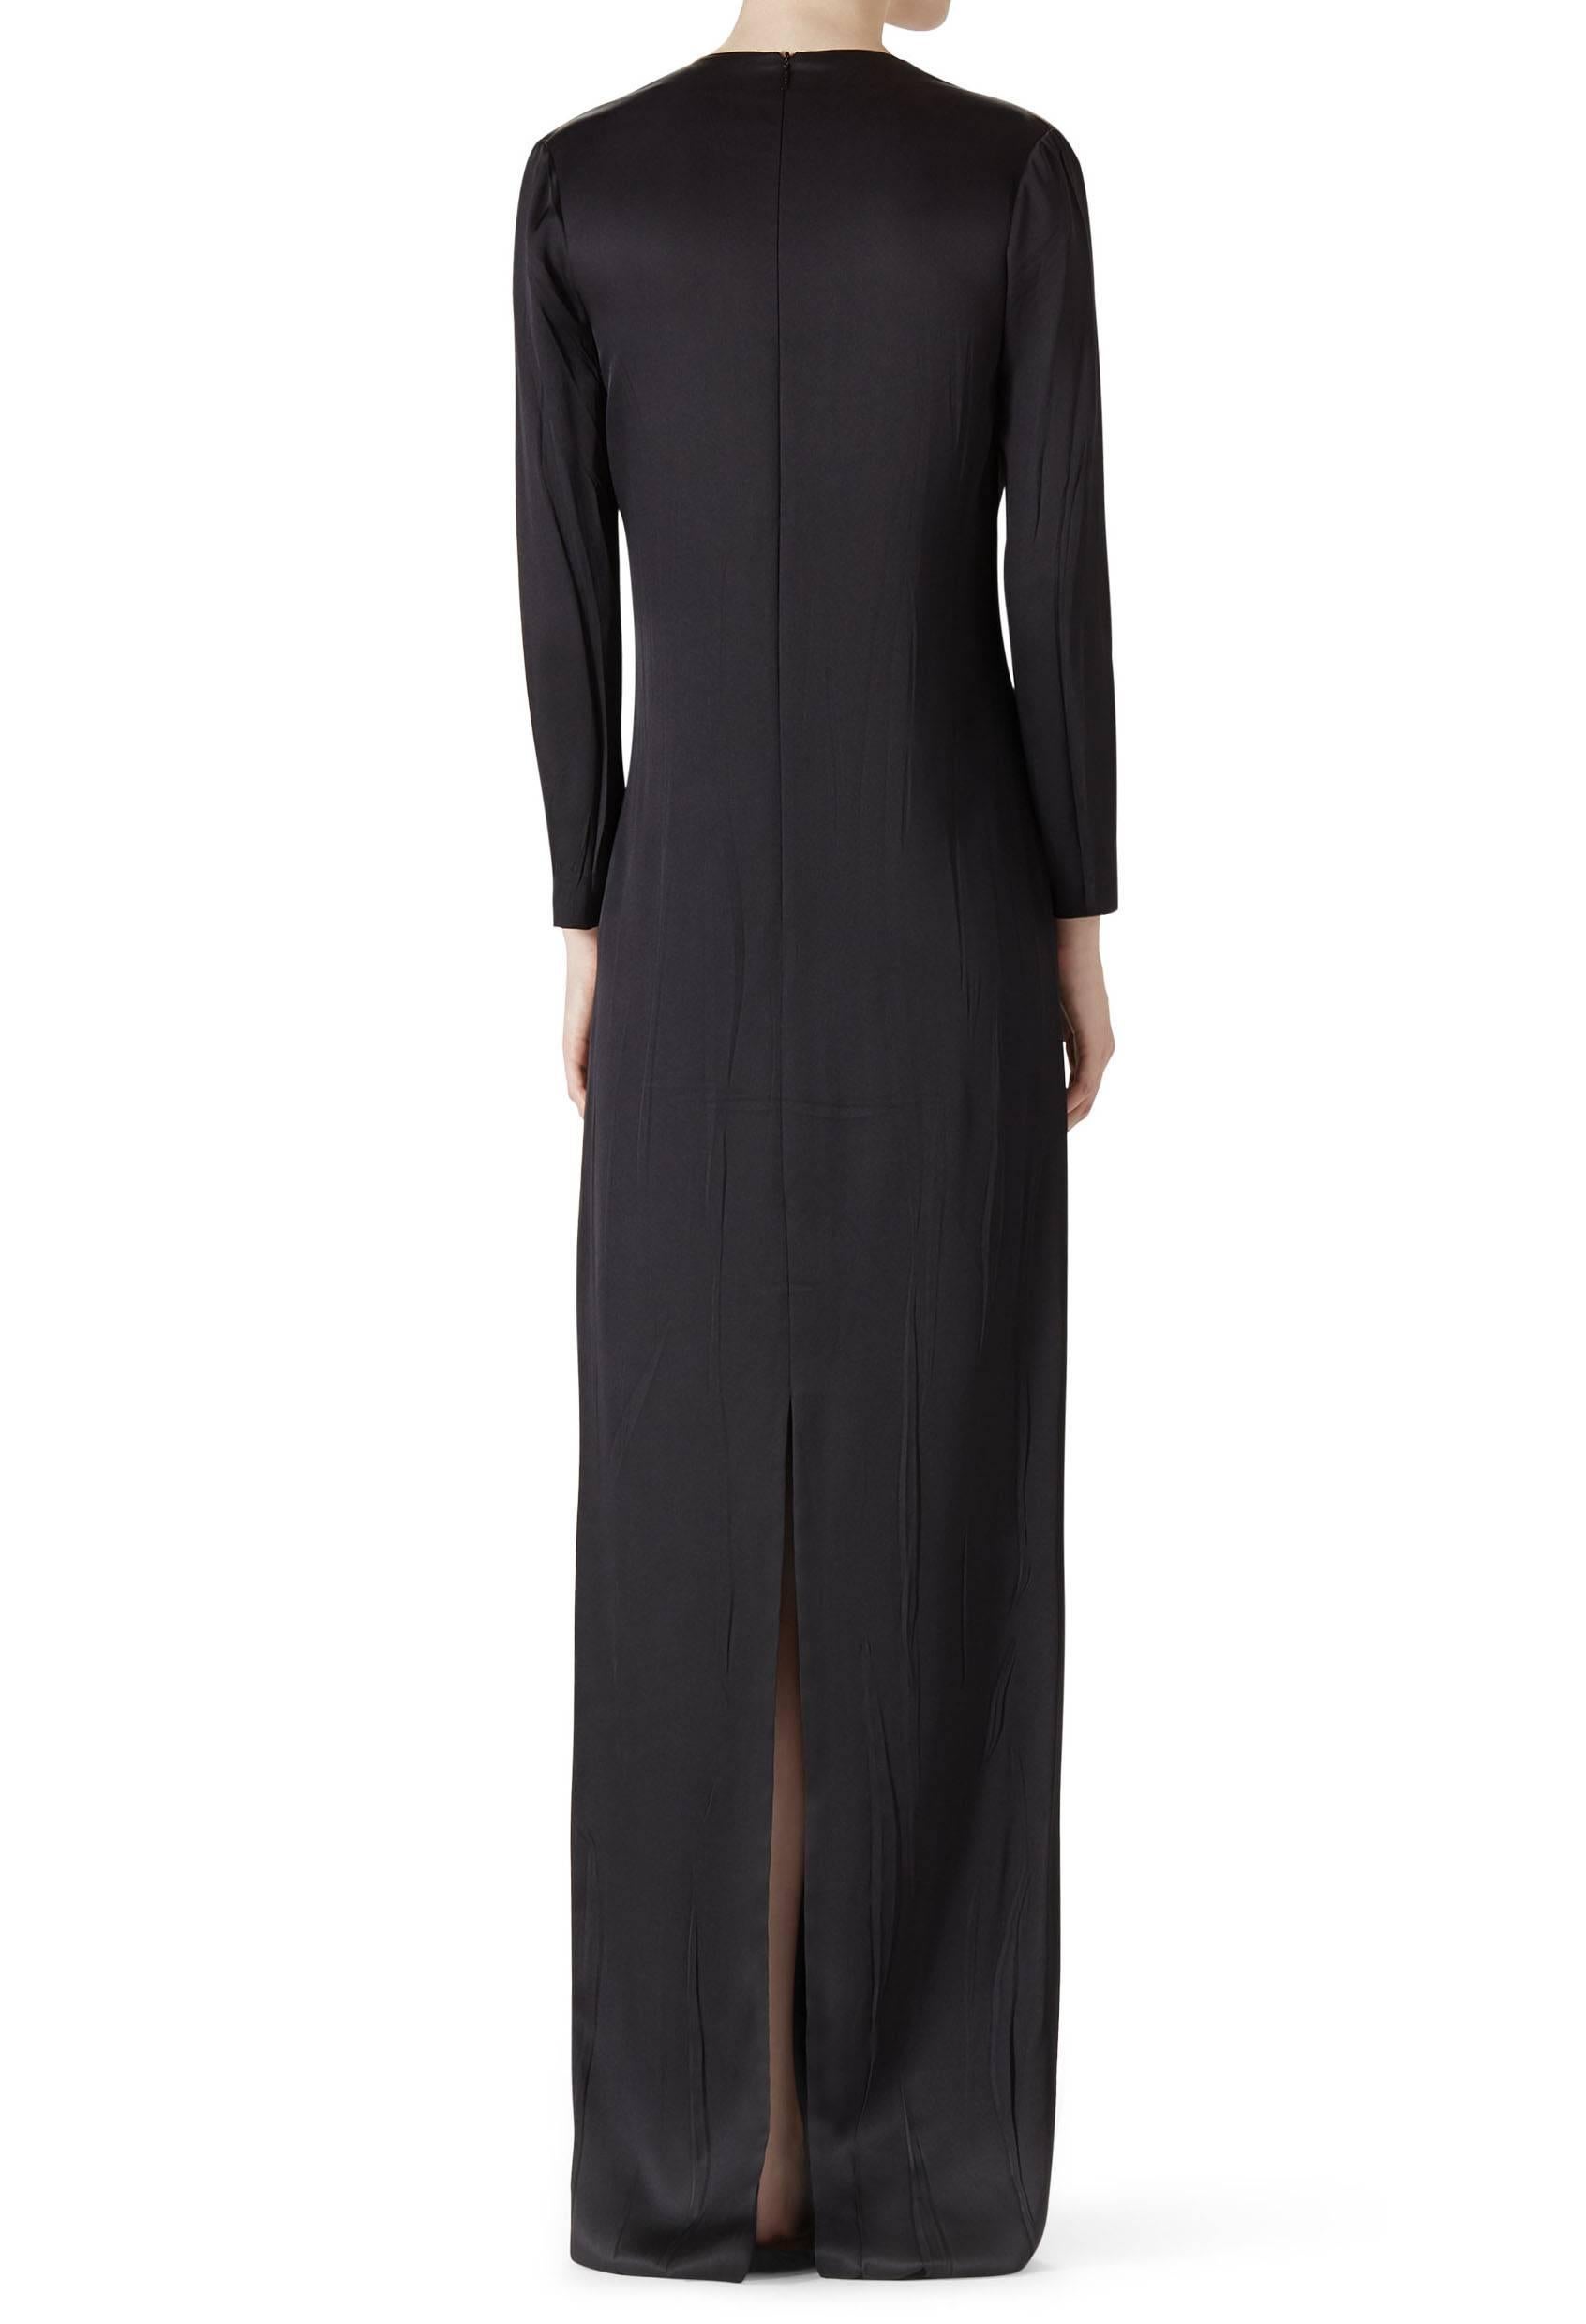 New Gucci Bird Embellished Crystals Black Silk Satin Dress Gown It.40 2